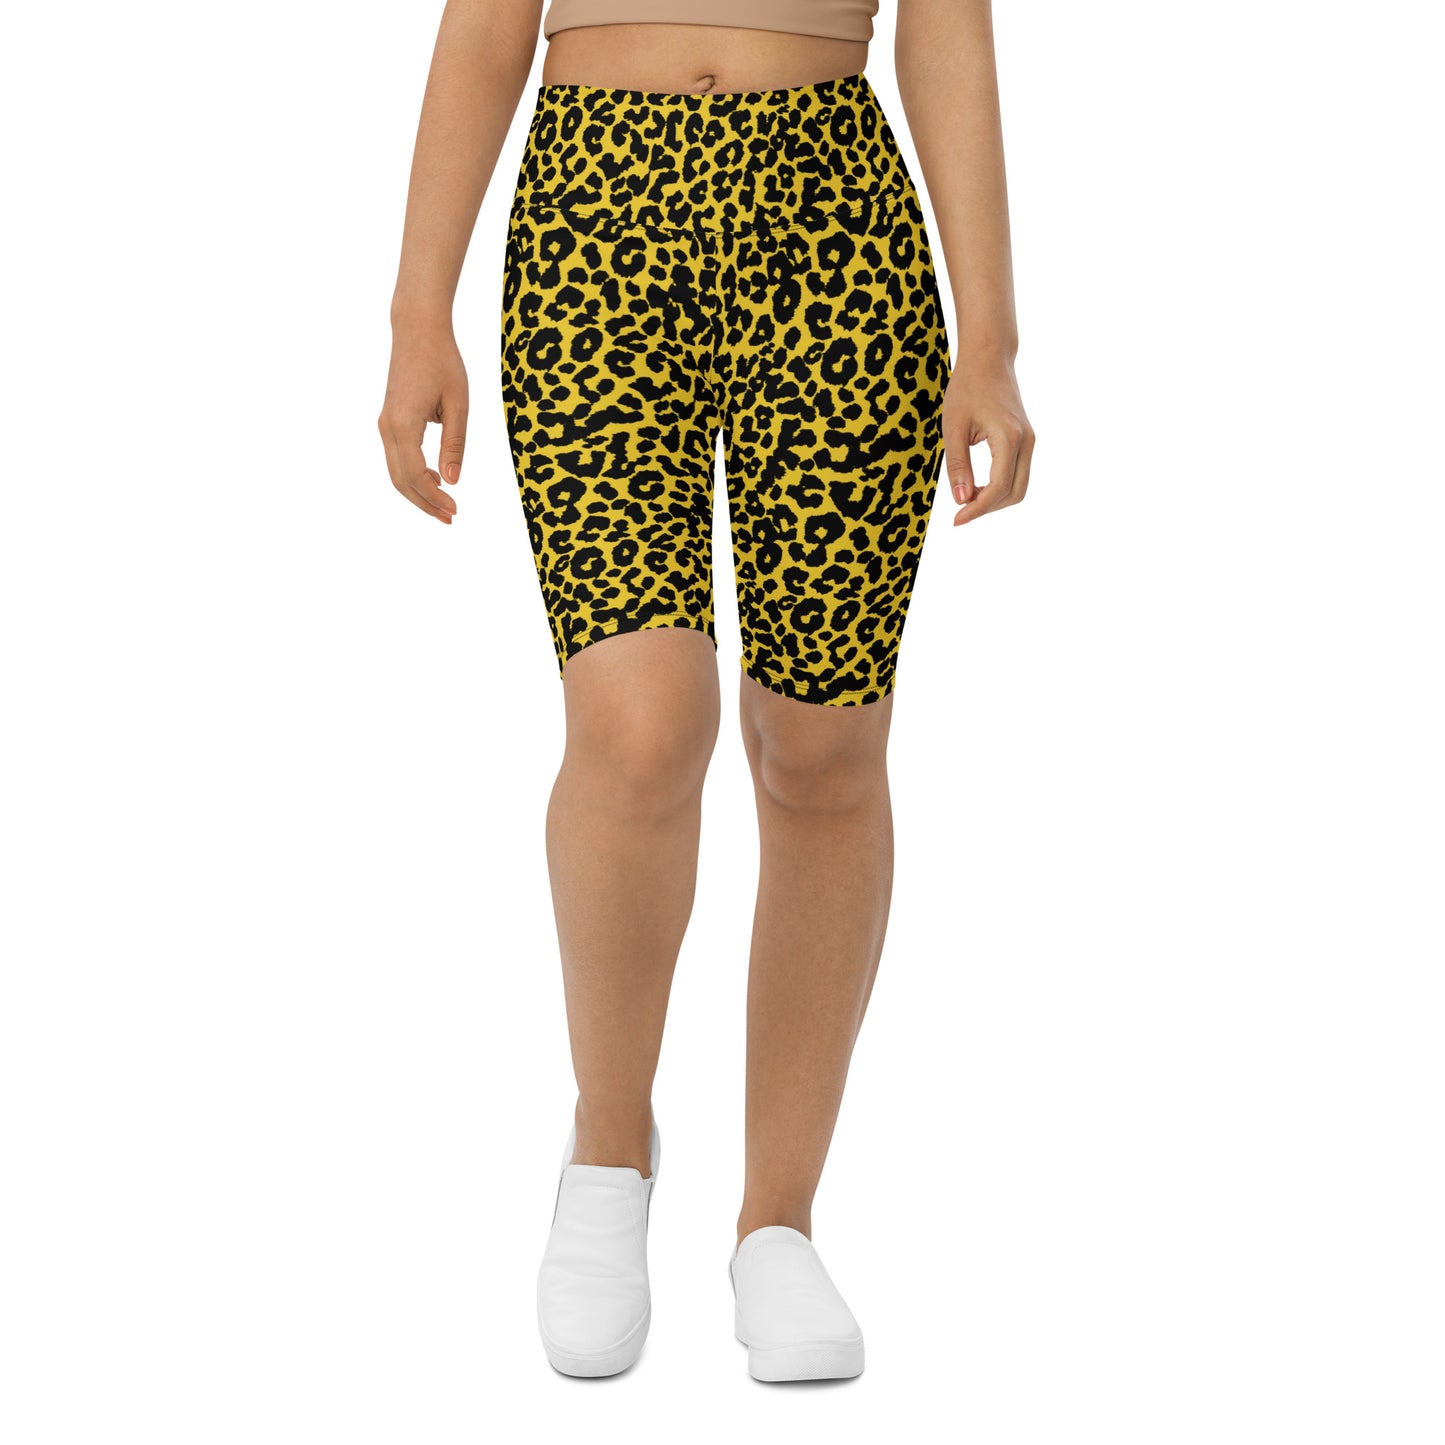 Cheetah Chase High-Waisted Biker Shorts